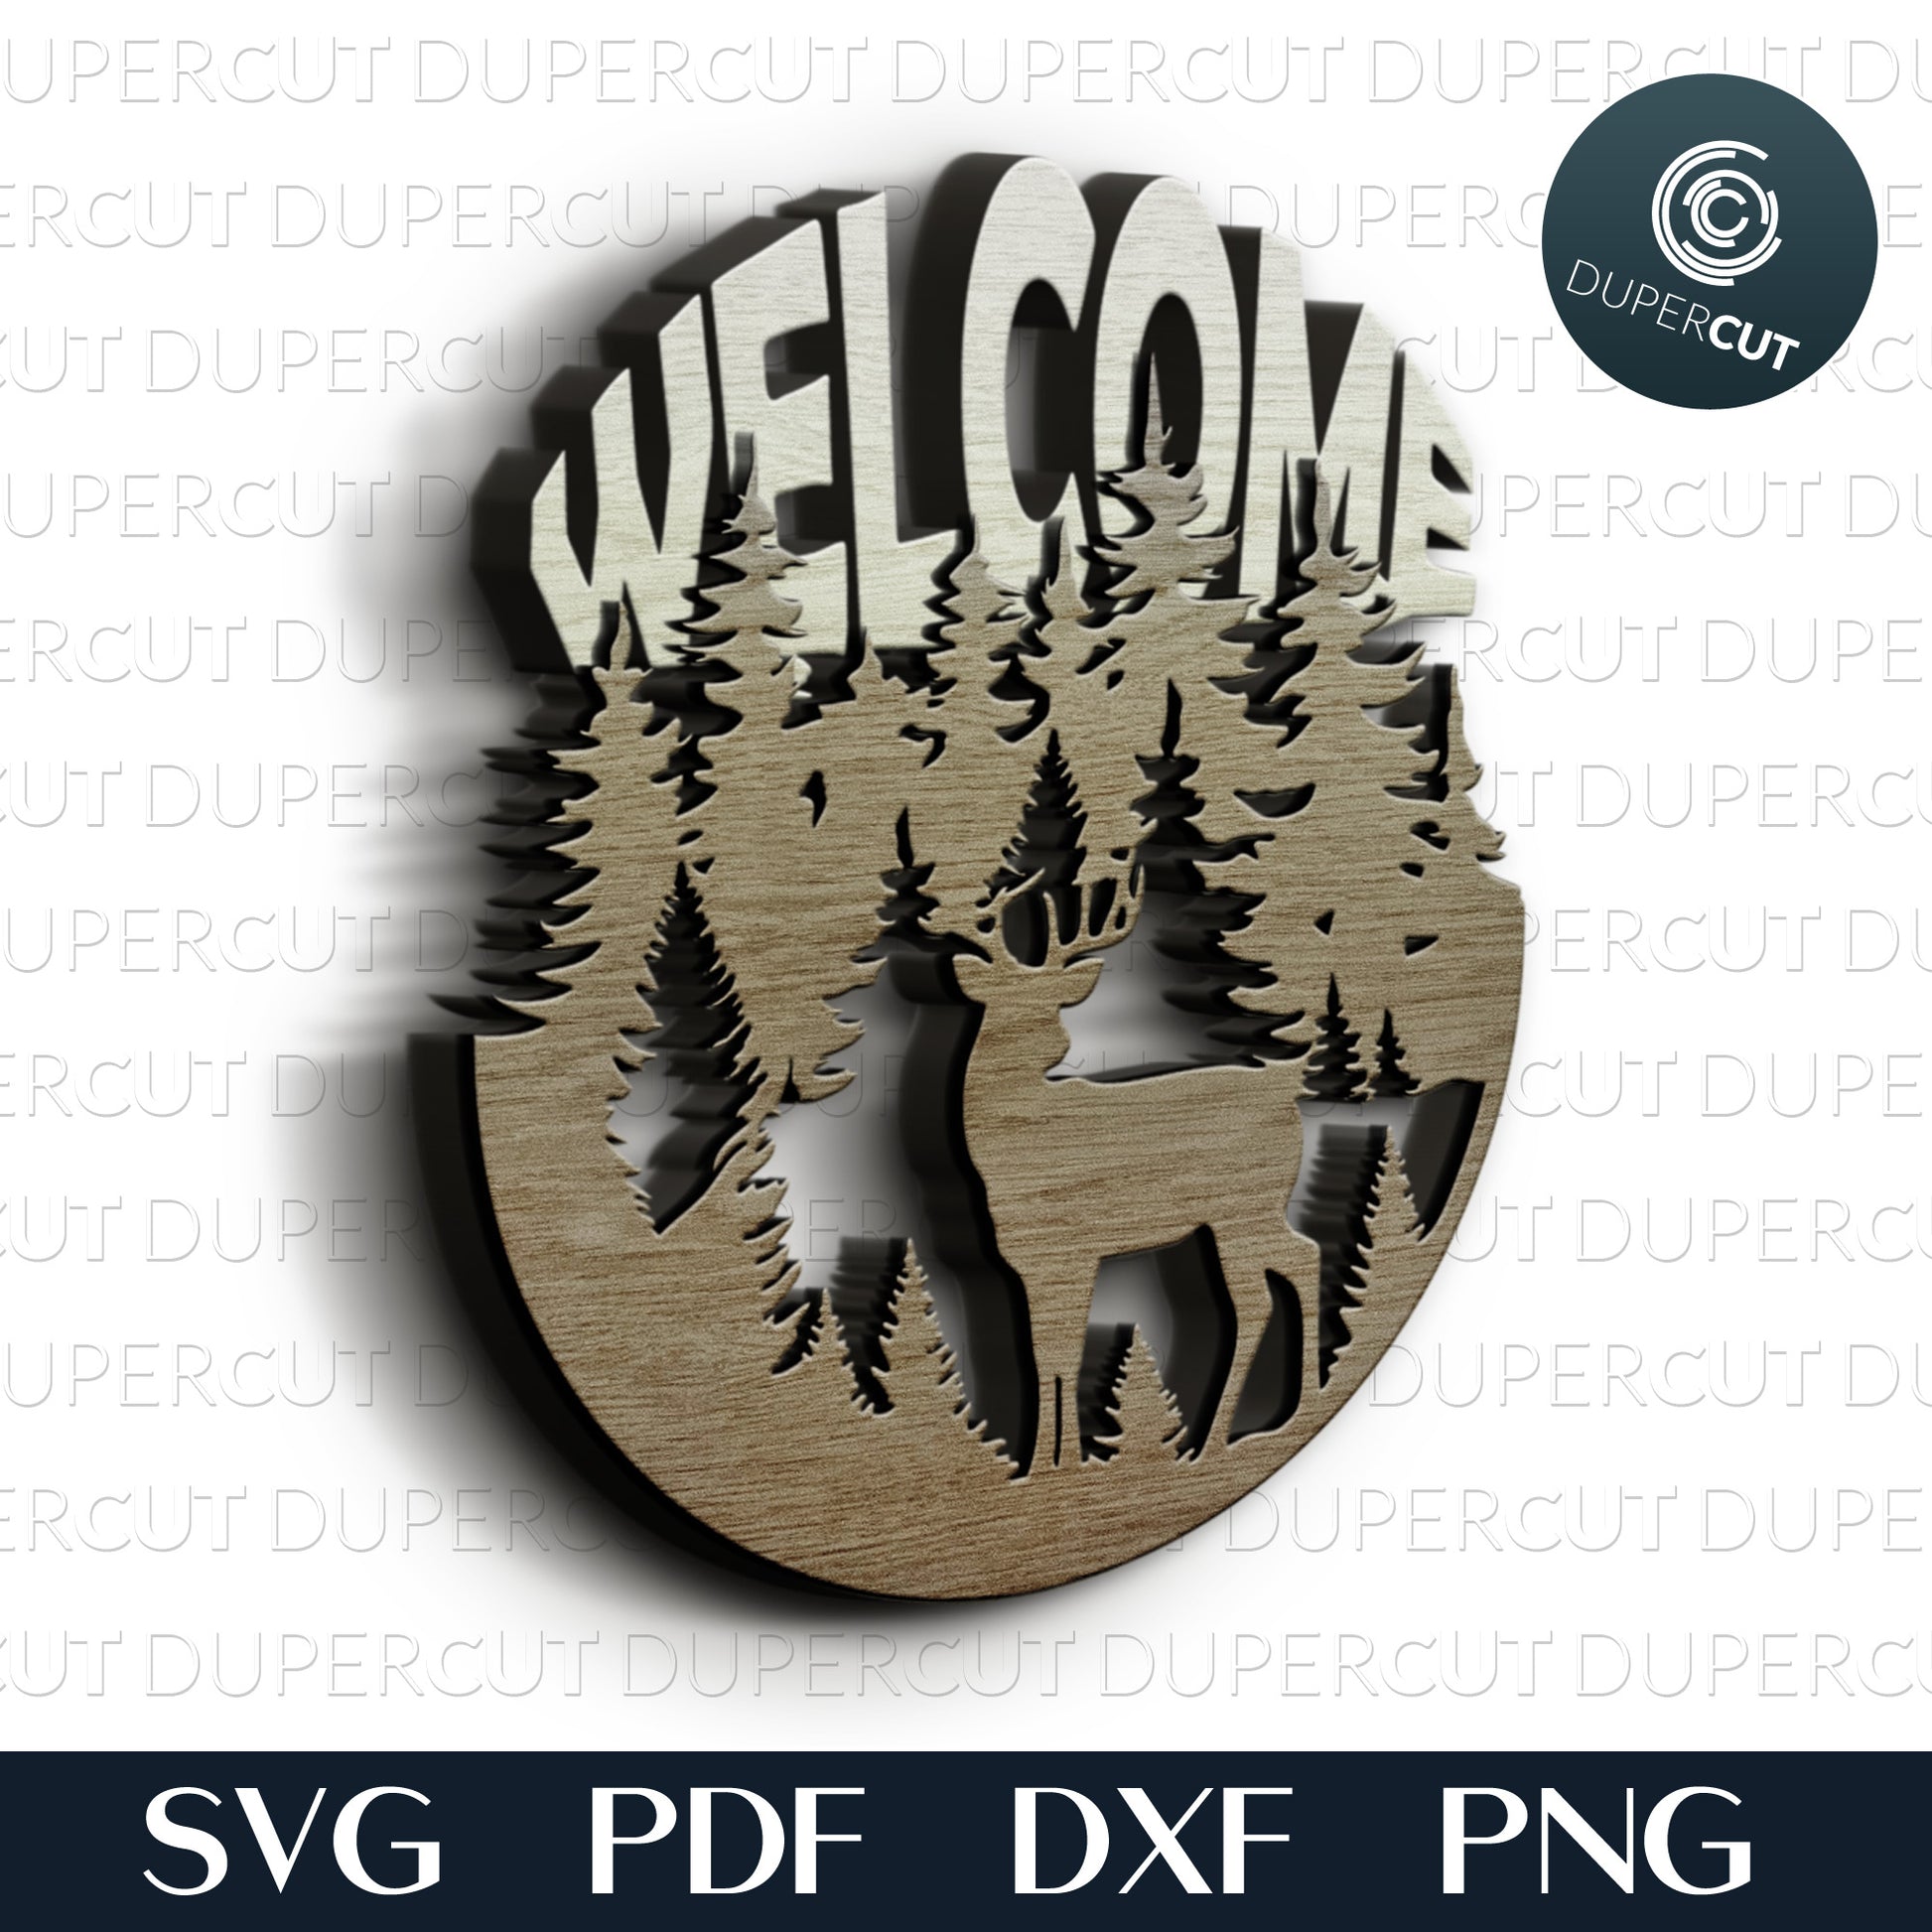 Wilderness scene deer Dual layer files. SVG PDF DXF cutting template for laser cutting, engraving, Glowforge, Cricut, Silhouette, CNC plasma